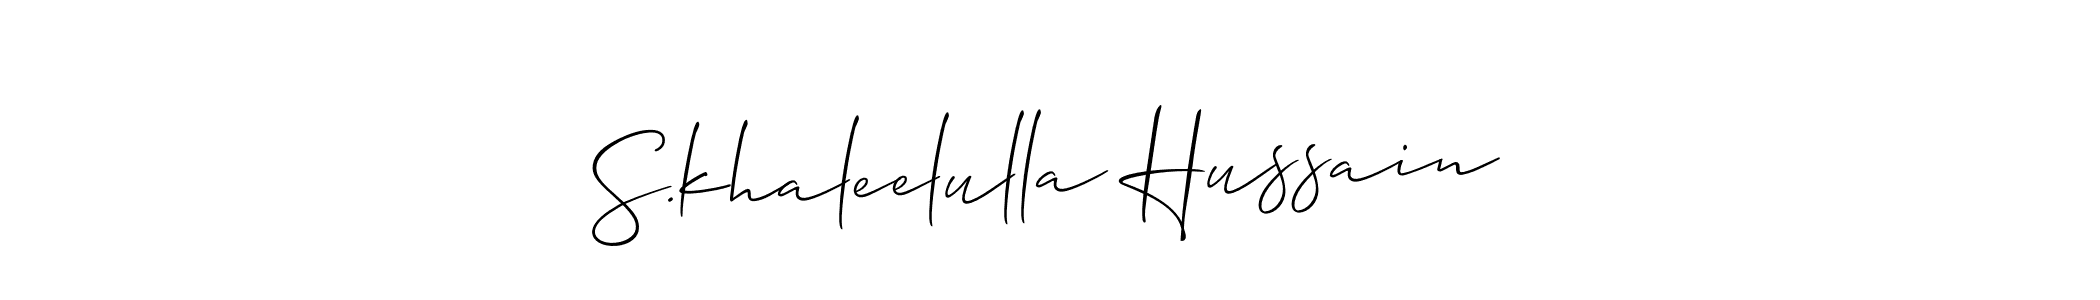 How to Draw S.khaleelulla Hussain signature style? Allison_Script is a latest design signature styles for name S.khaleelulla Hussain. S.khaleelulla Hussain signature style 2 images and pictures png